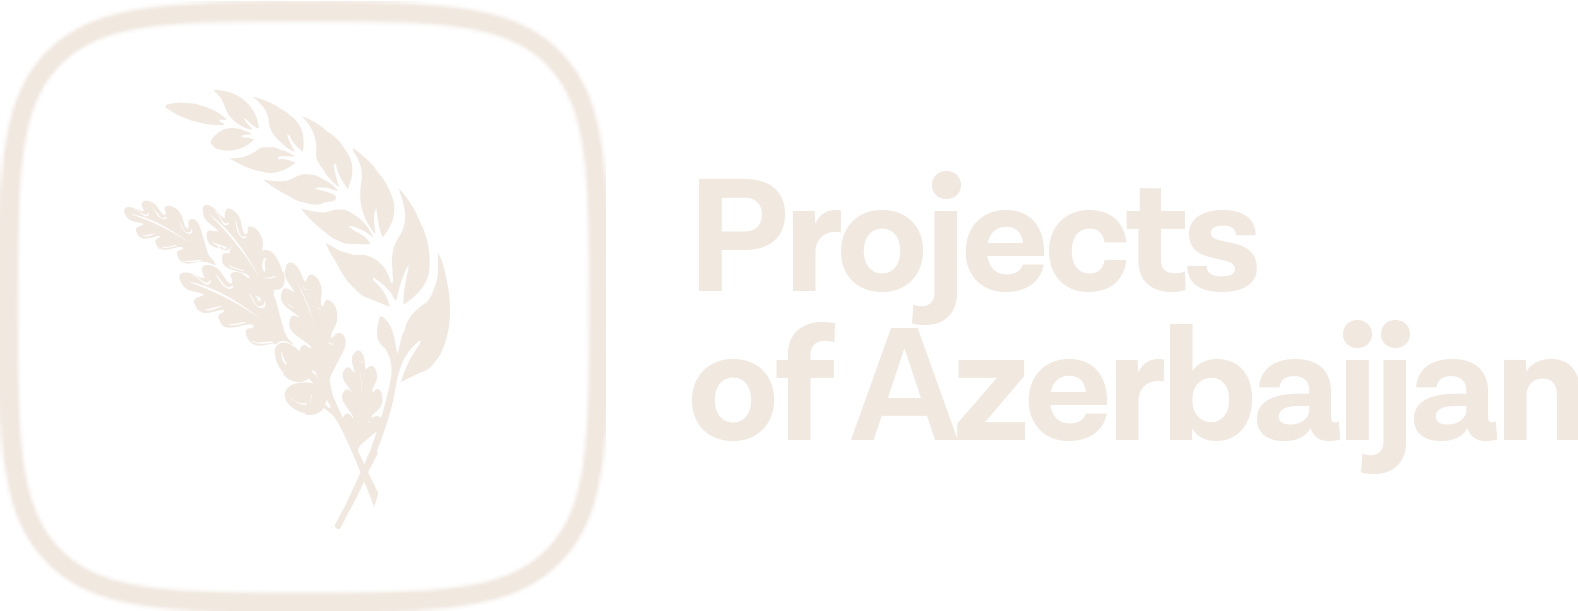 Proejcts of Azerbaijan